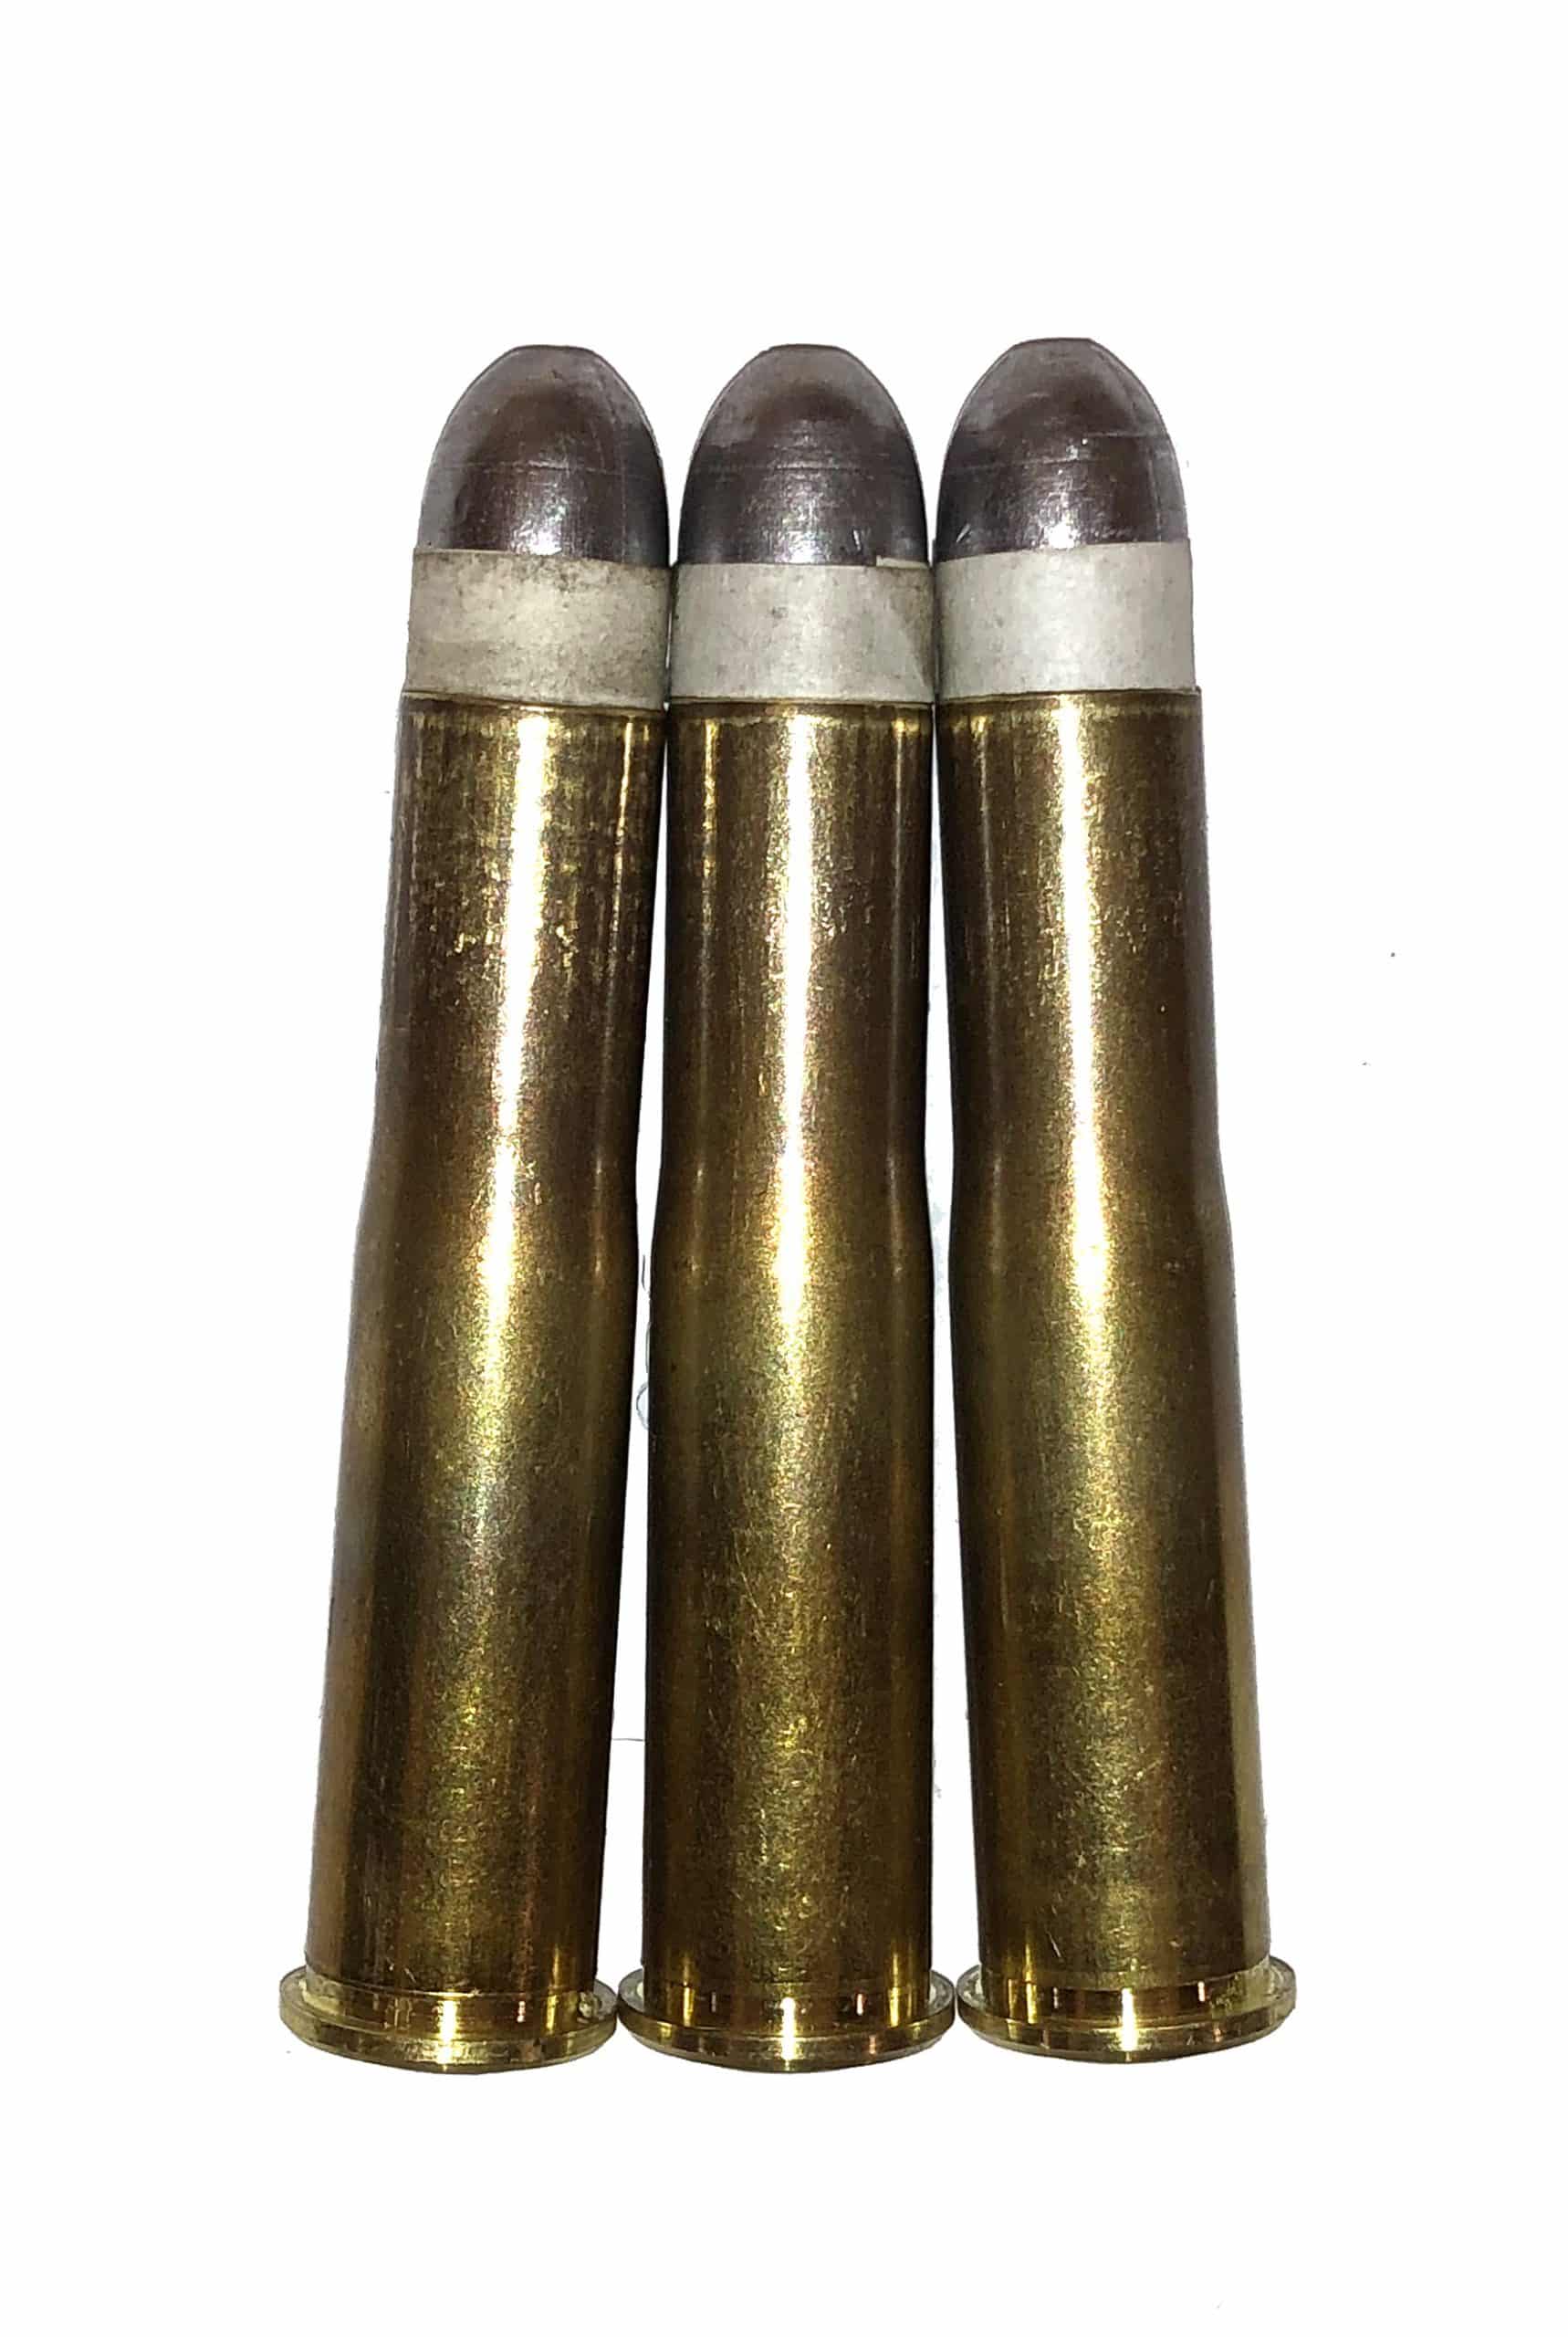 11mm Mauser snap caps dummy rounds fake bullets J&M Spec INERT